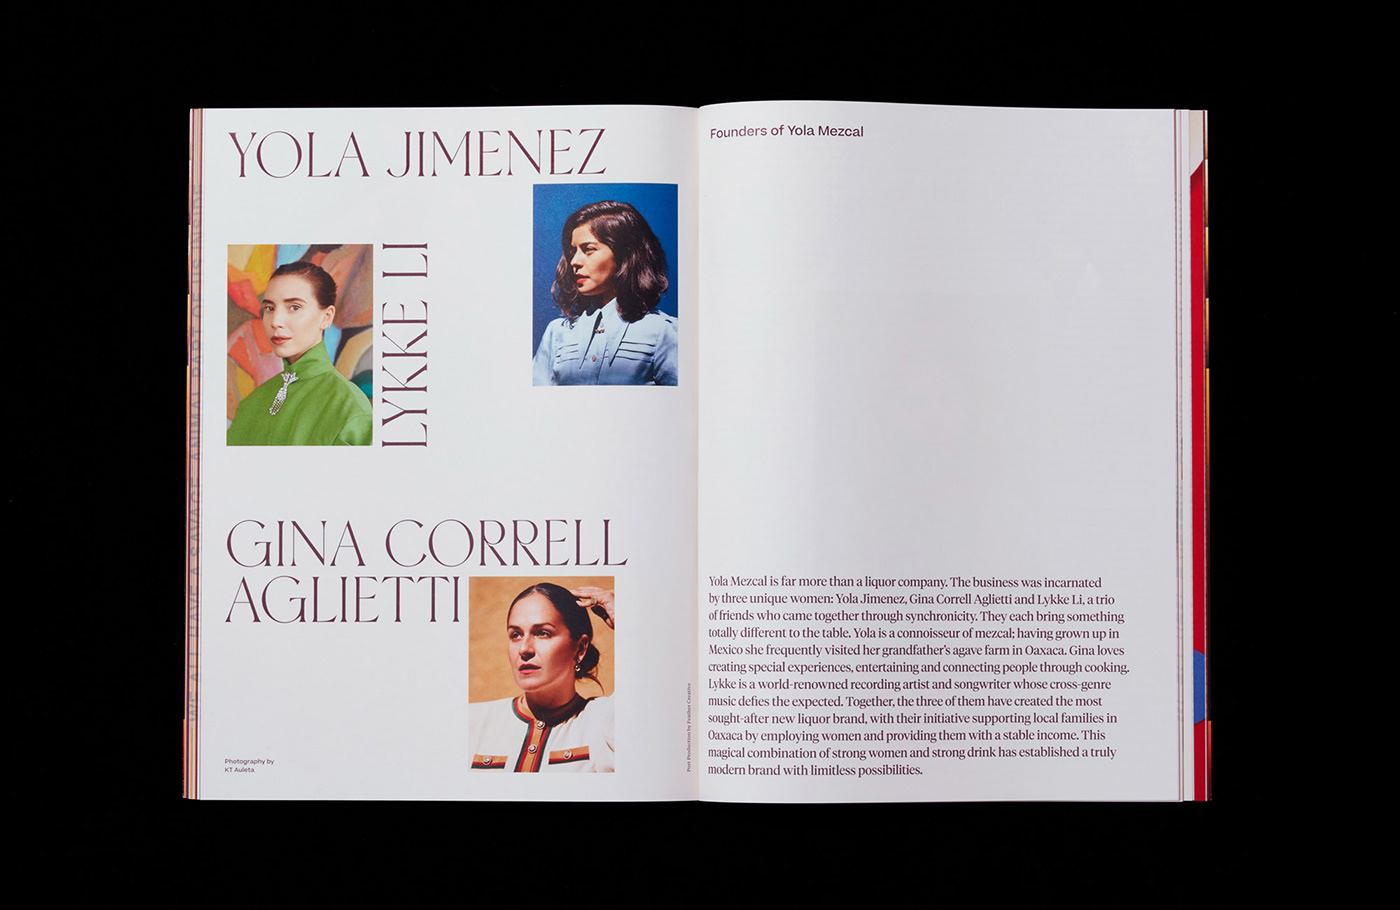 art bold colorful editorial design  Fashion  graphic design  Portraiture print Romance Journal typography  